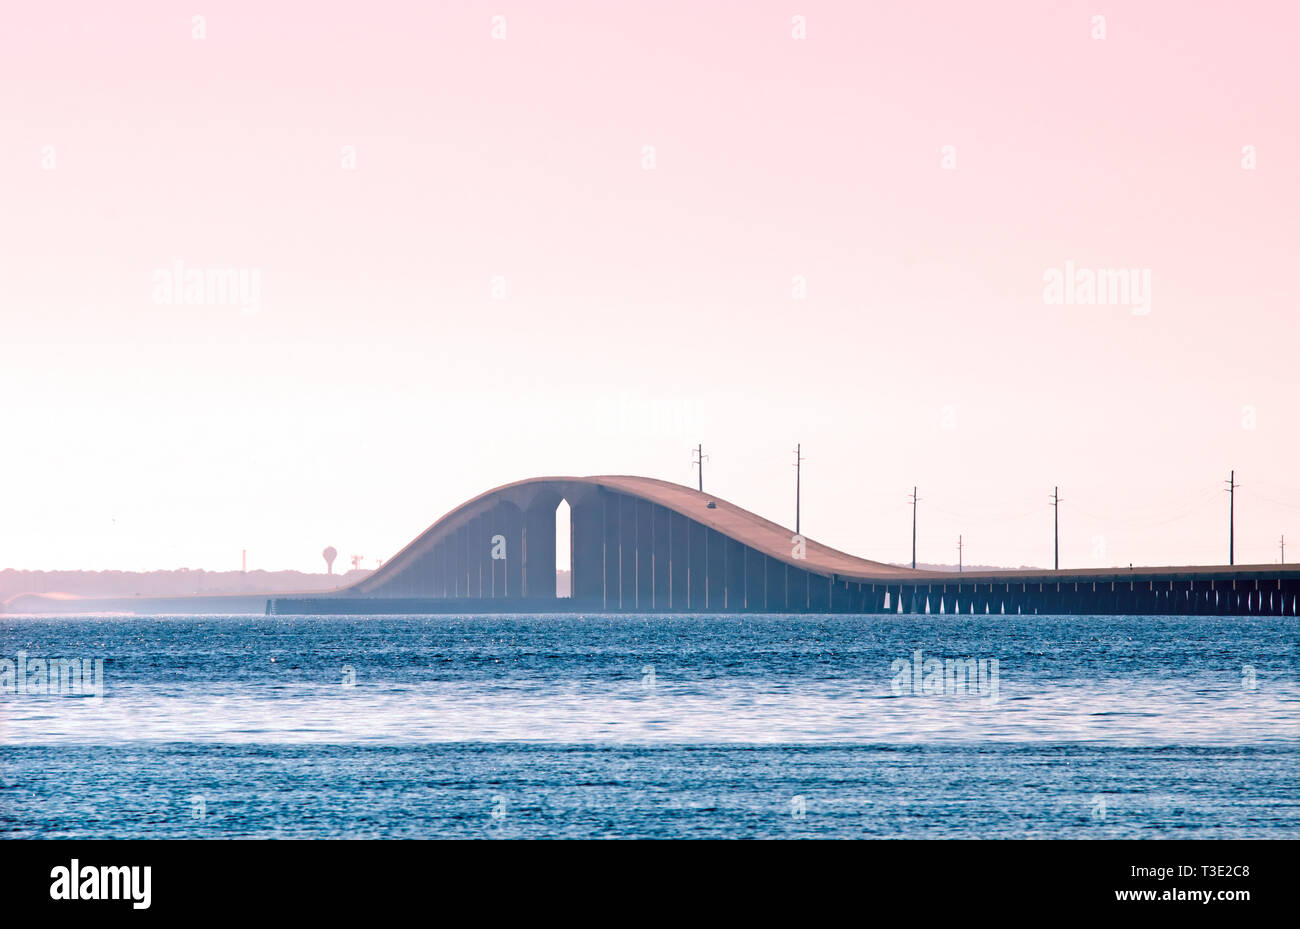 https://c8.alamy.com/comp/T3E2C8/the-dauphin-island-bridge-is-pictured-at-sunrise-in-dauphin-island-alabama-T3E2C8.jpg